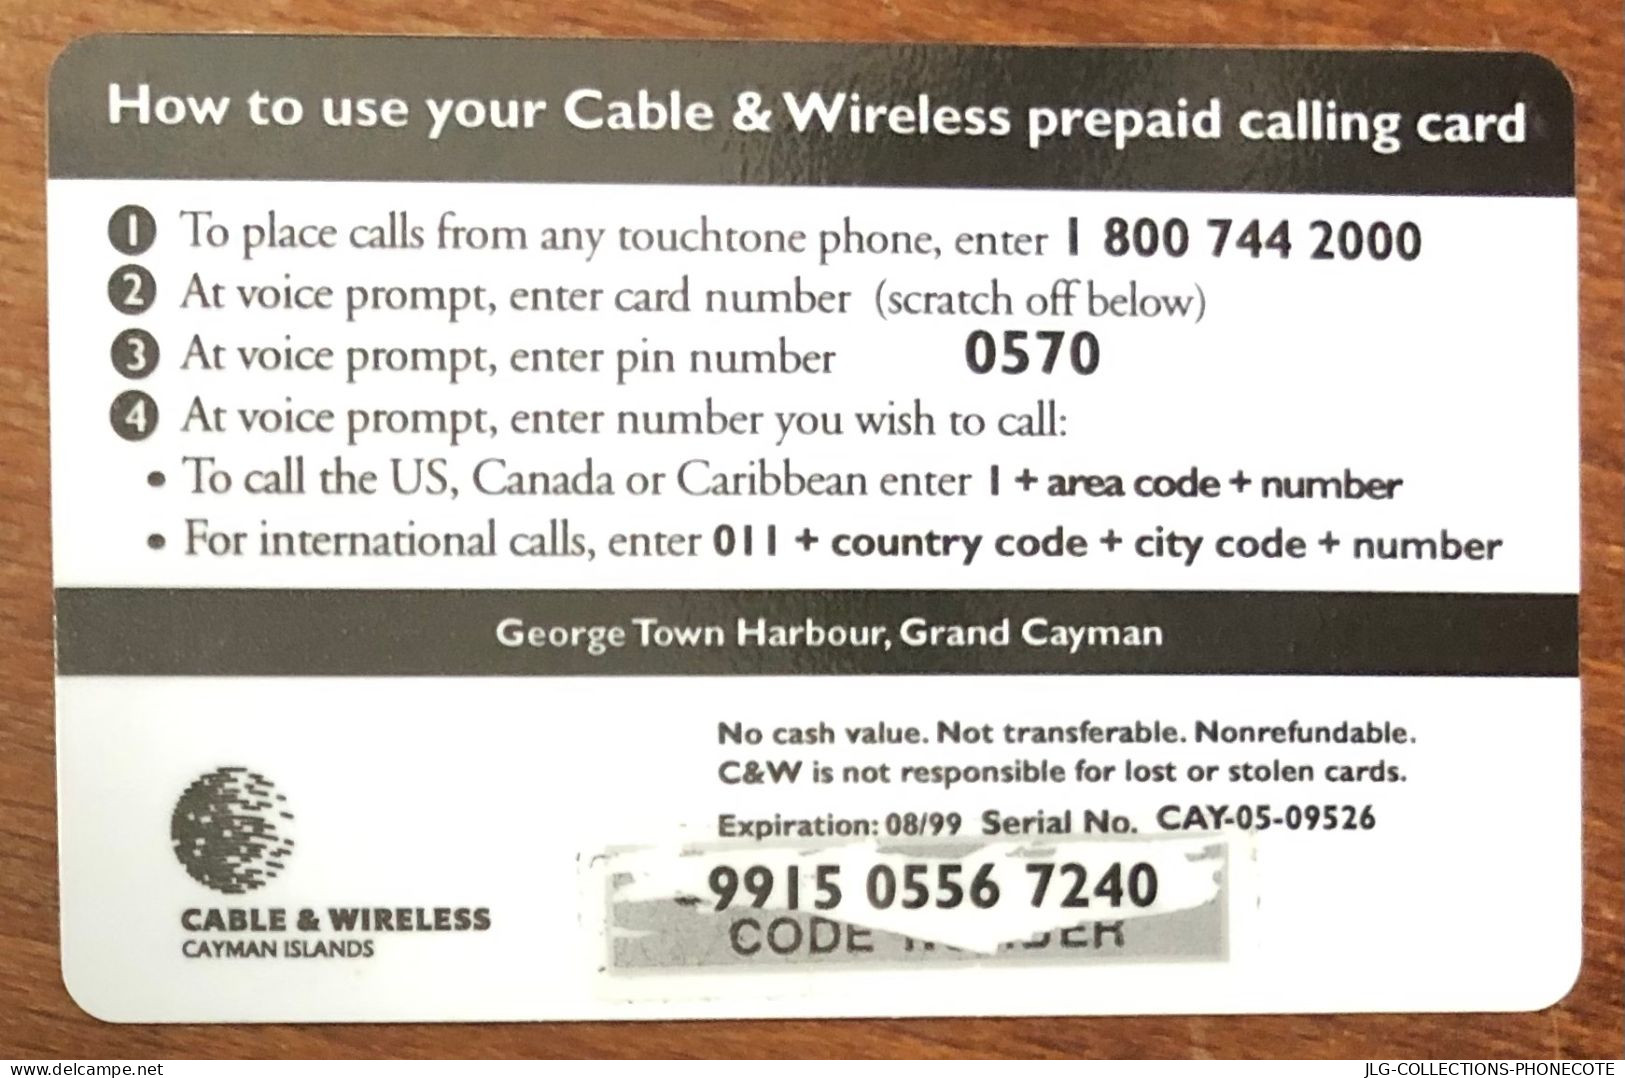 CAYMAN ISLANDS CI$ 16 CARIBBEAN PREPAID PREPAYÉE SCHEDA TELECARTE TELEFONKARTE PHONECARD CALLING CARD - Iles Cayman